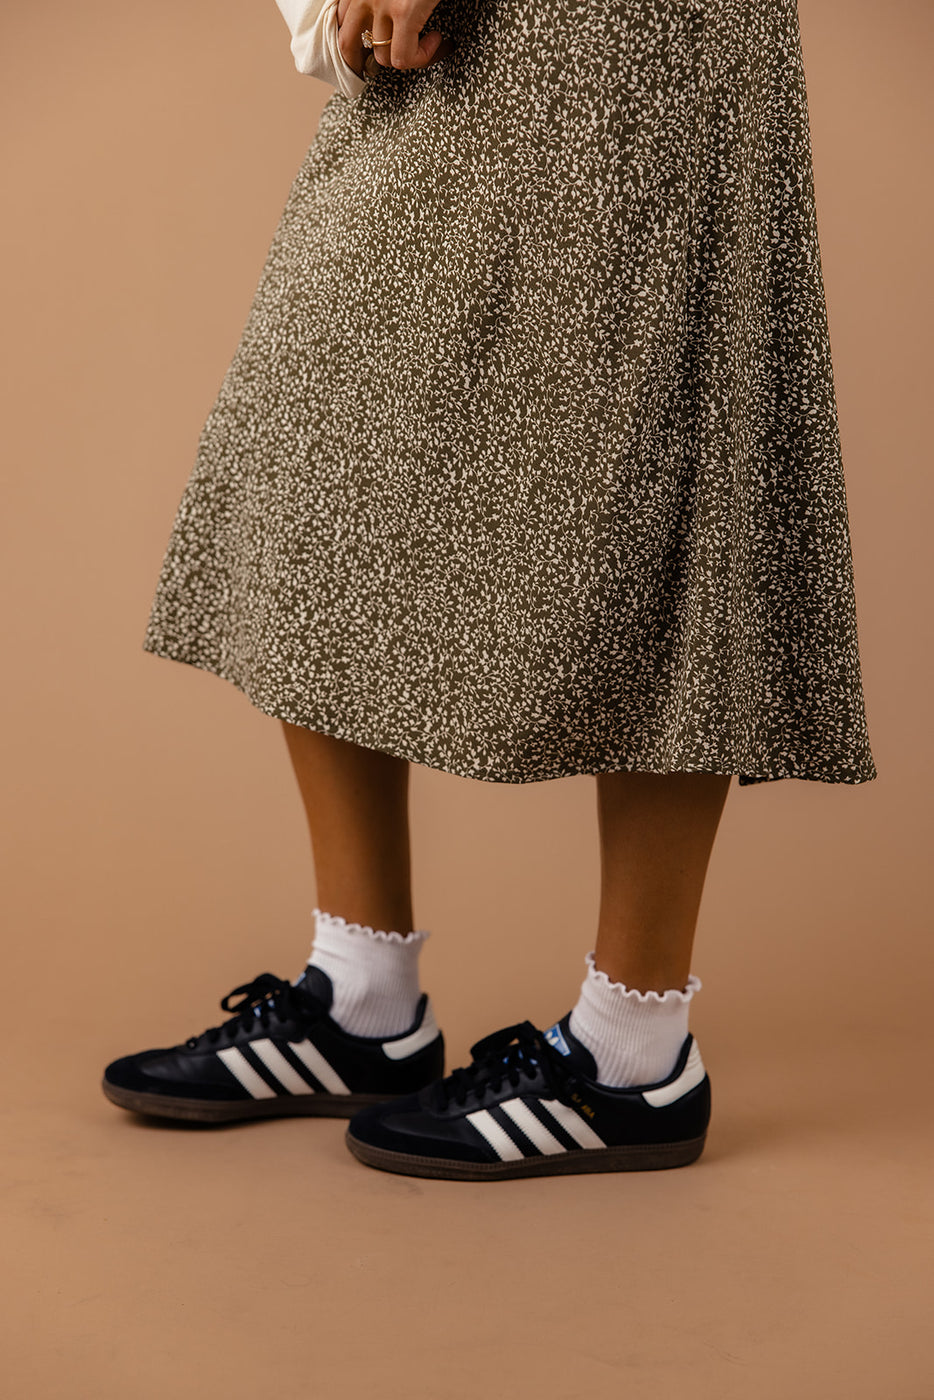 Tiny Perfect Things Midi Skirt